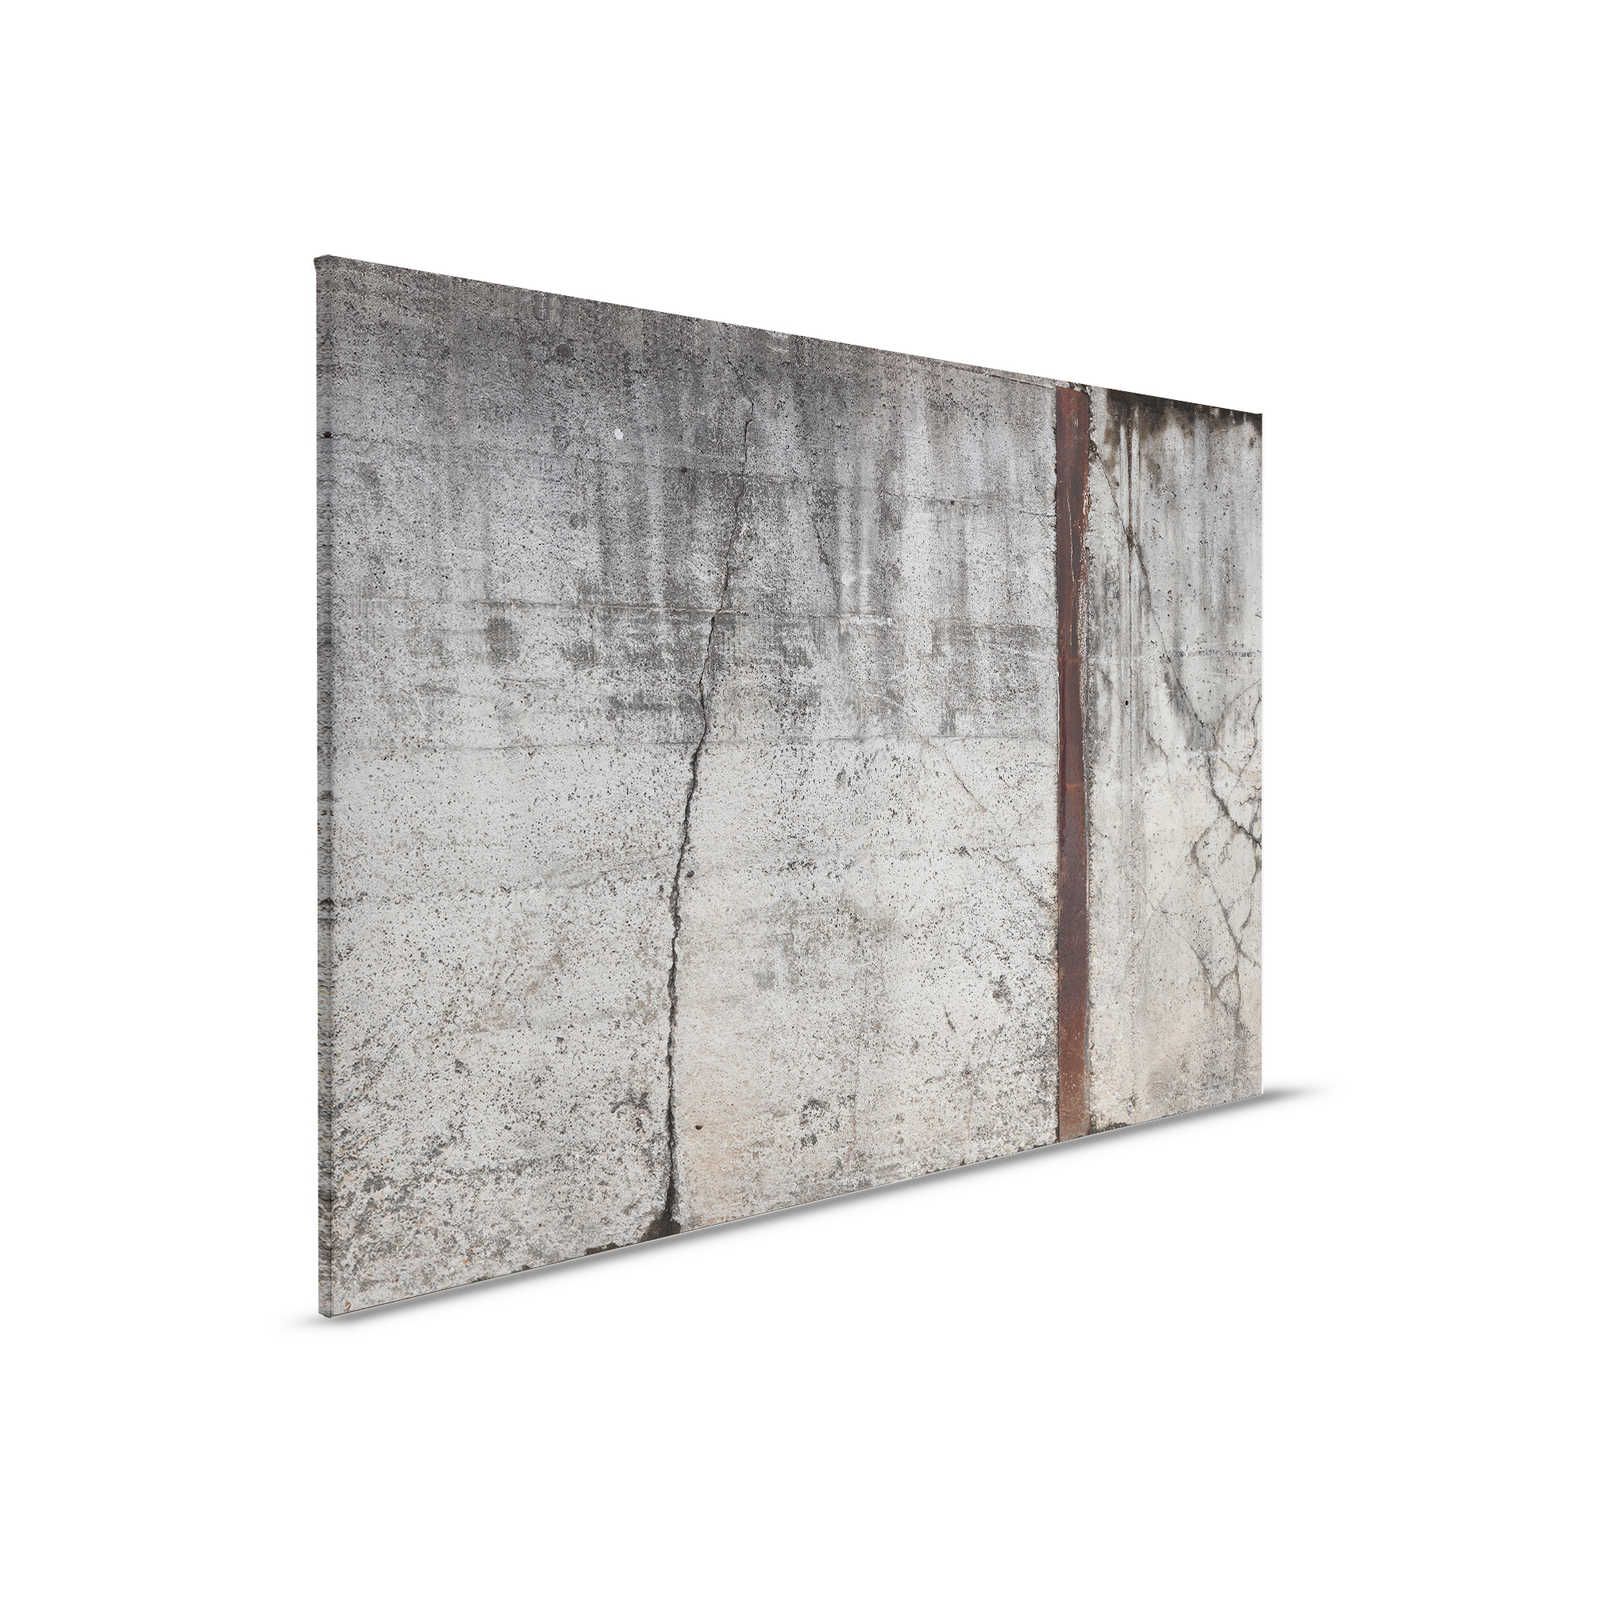         Leinwandbild Beton Wand im rustikalen Stil Stahlbeton – 0,90 m x 0,60 m
    